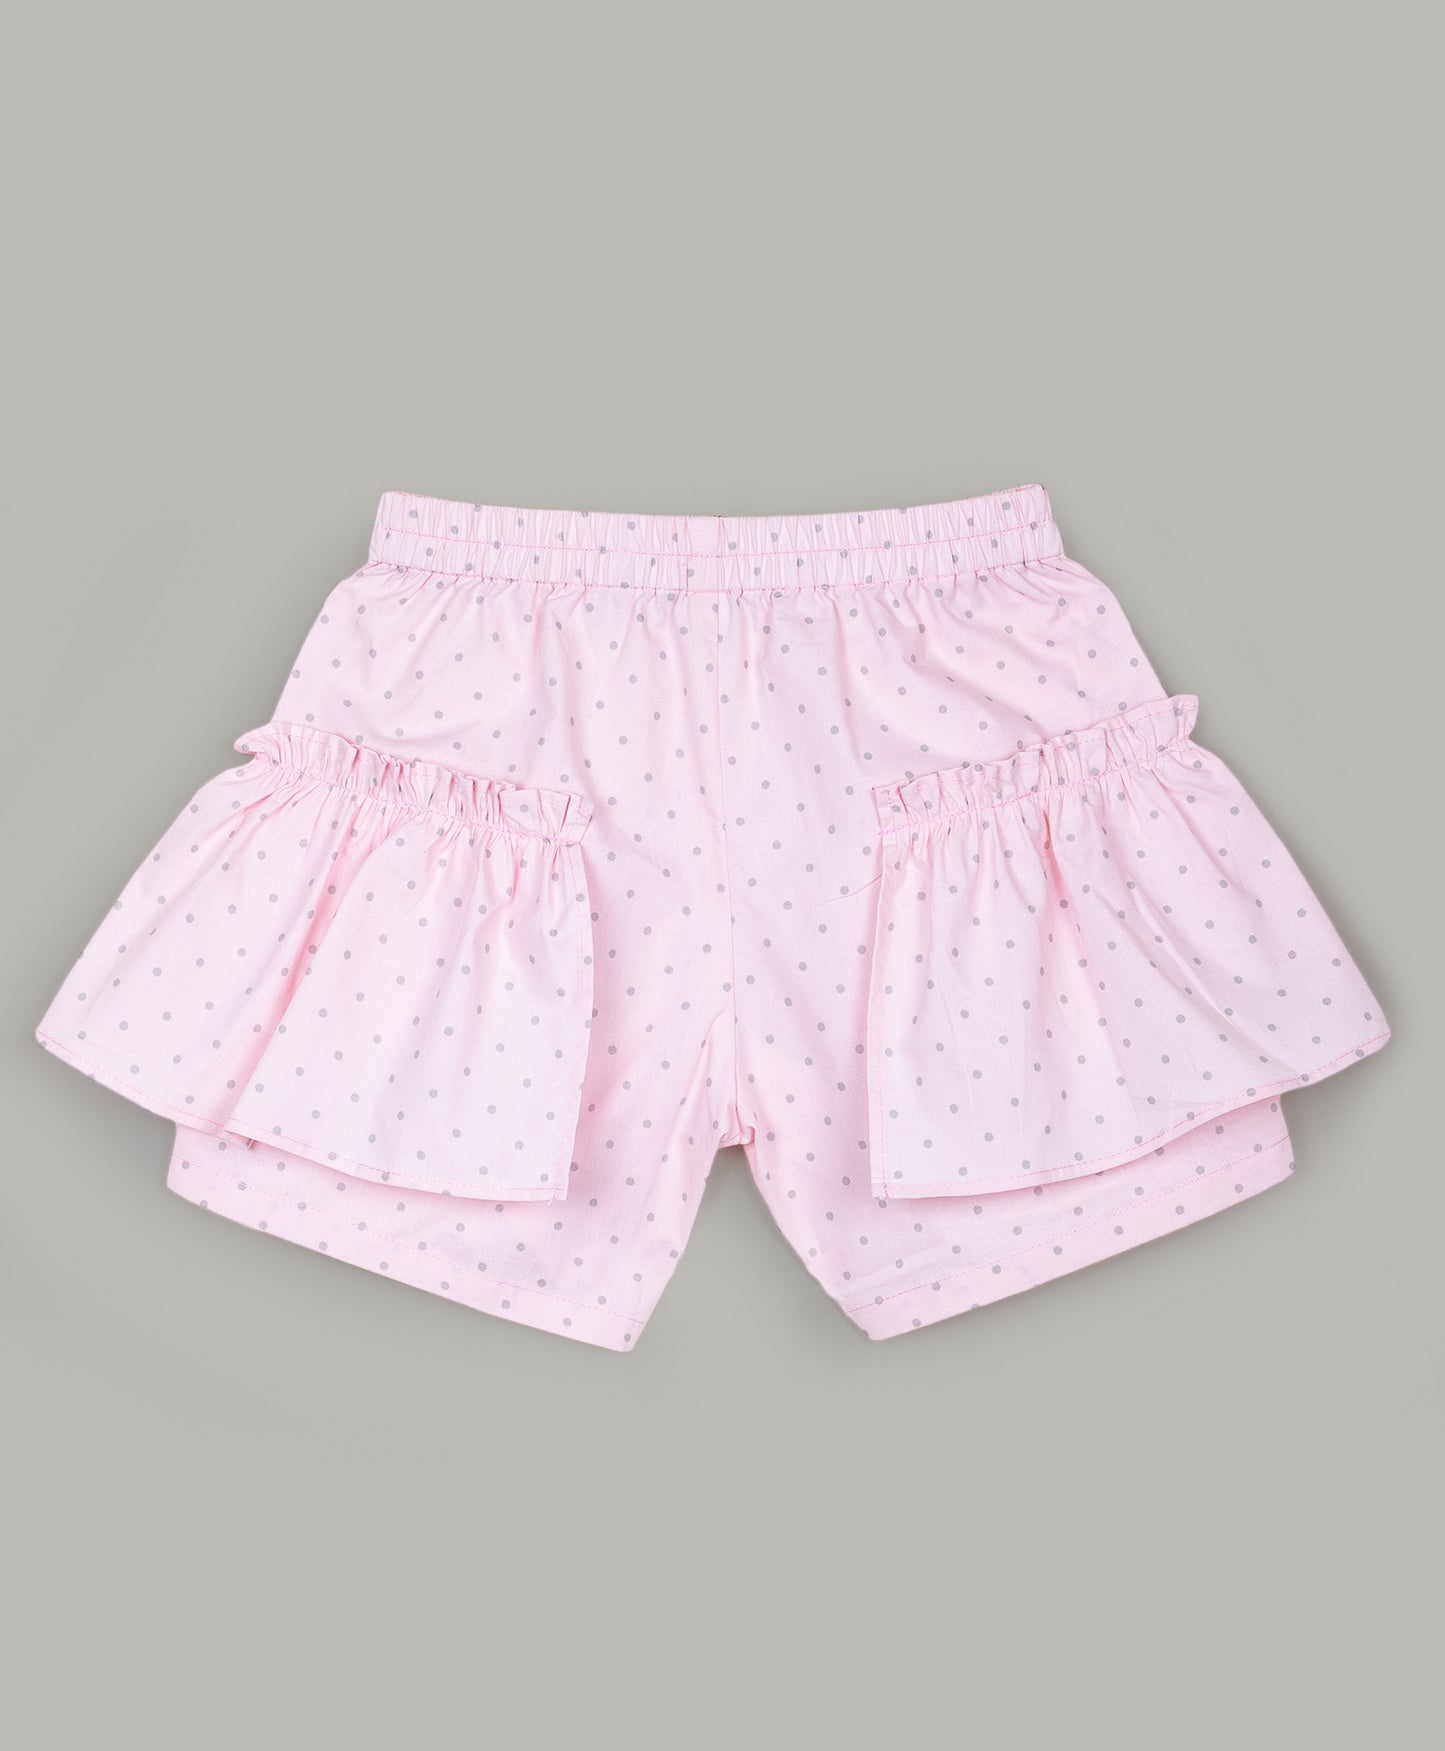 Pastel Pink shorts with grey dots